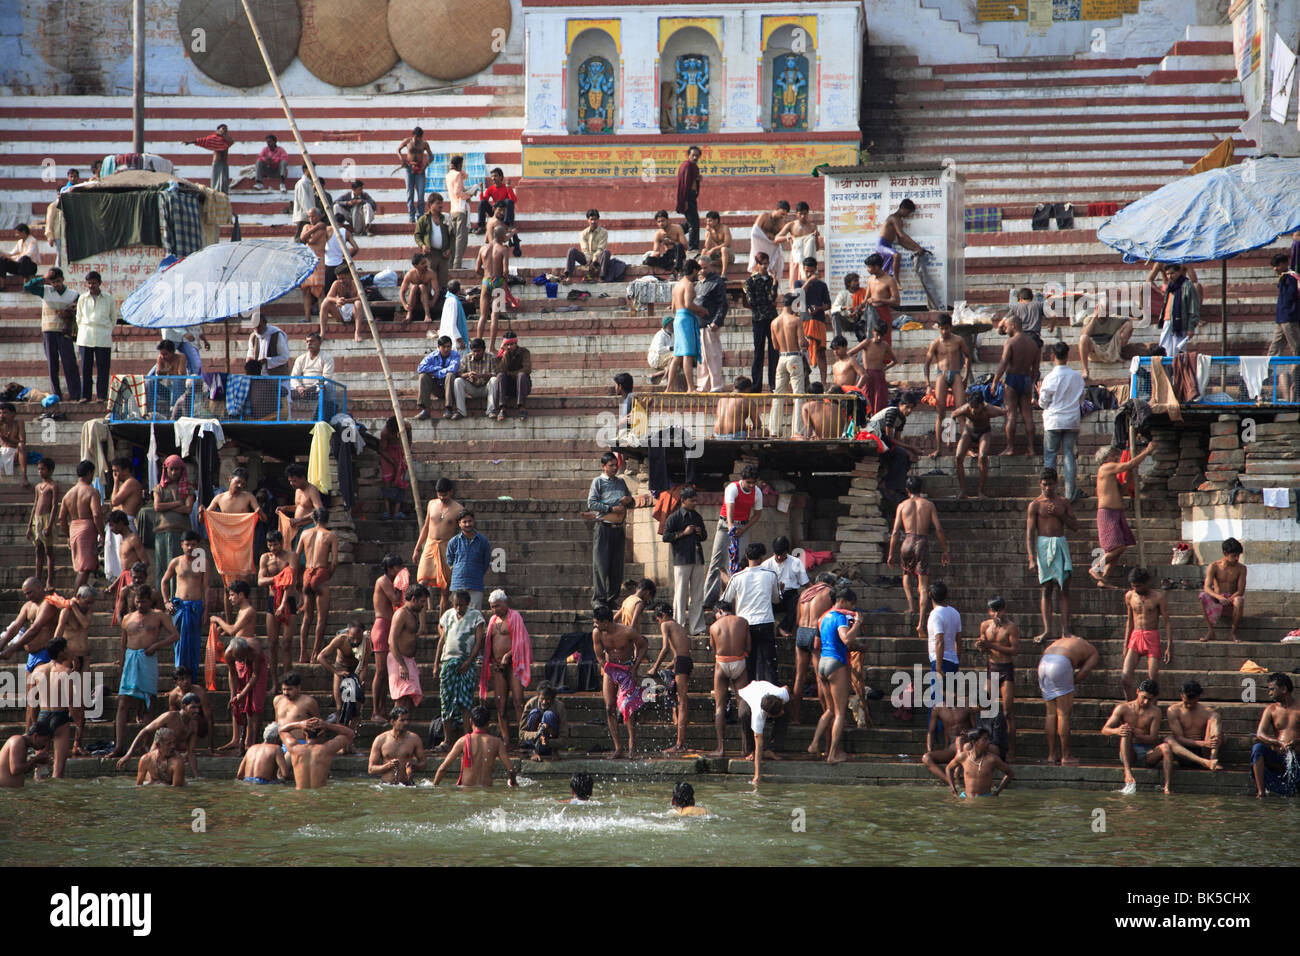 Hindu pilgrims take part in ritual bathing, Ganges River, Varanasi, Uttar Pradesh, India, Asia Stock Photo